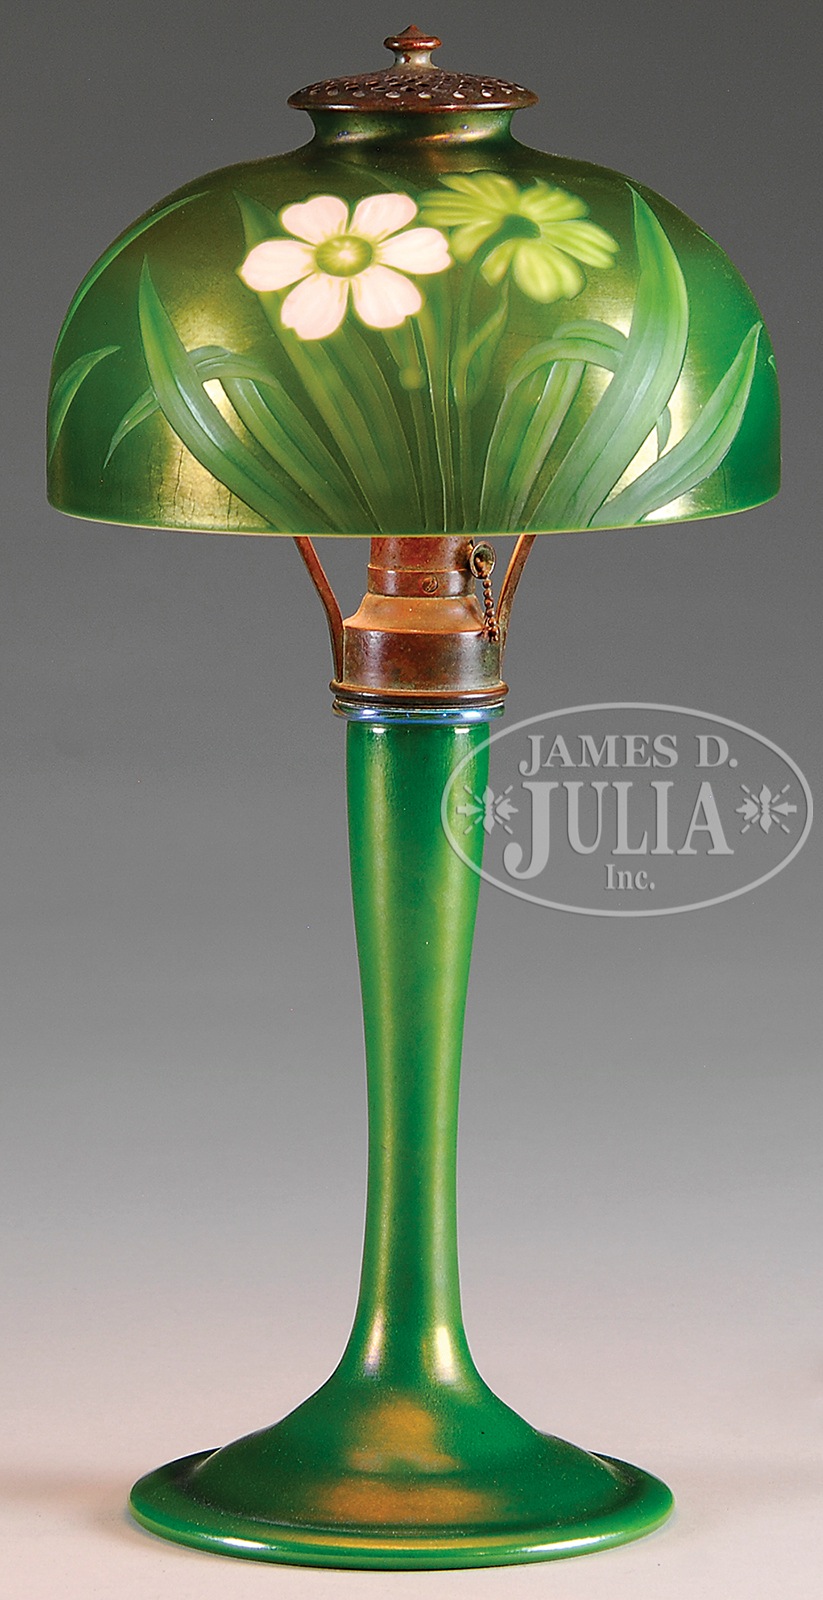 Wheel-carved Tiffany Favrile lamp, Julia lot #3327